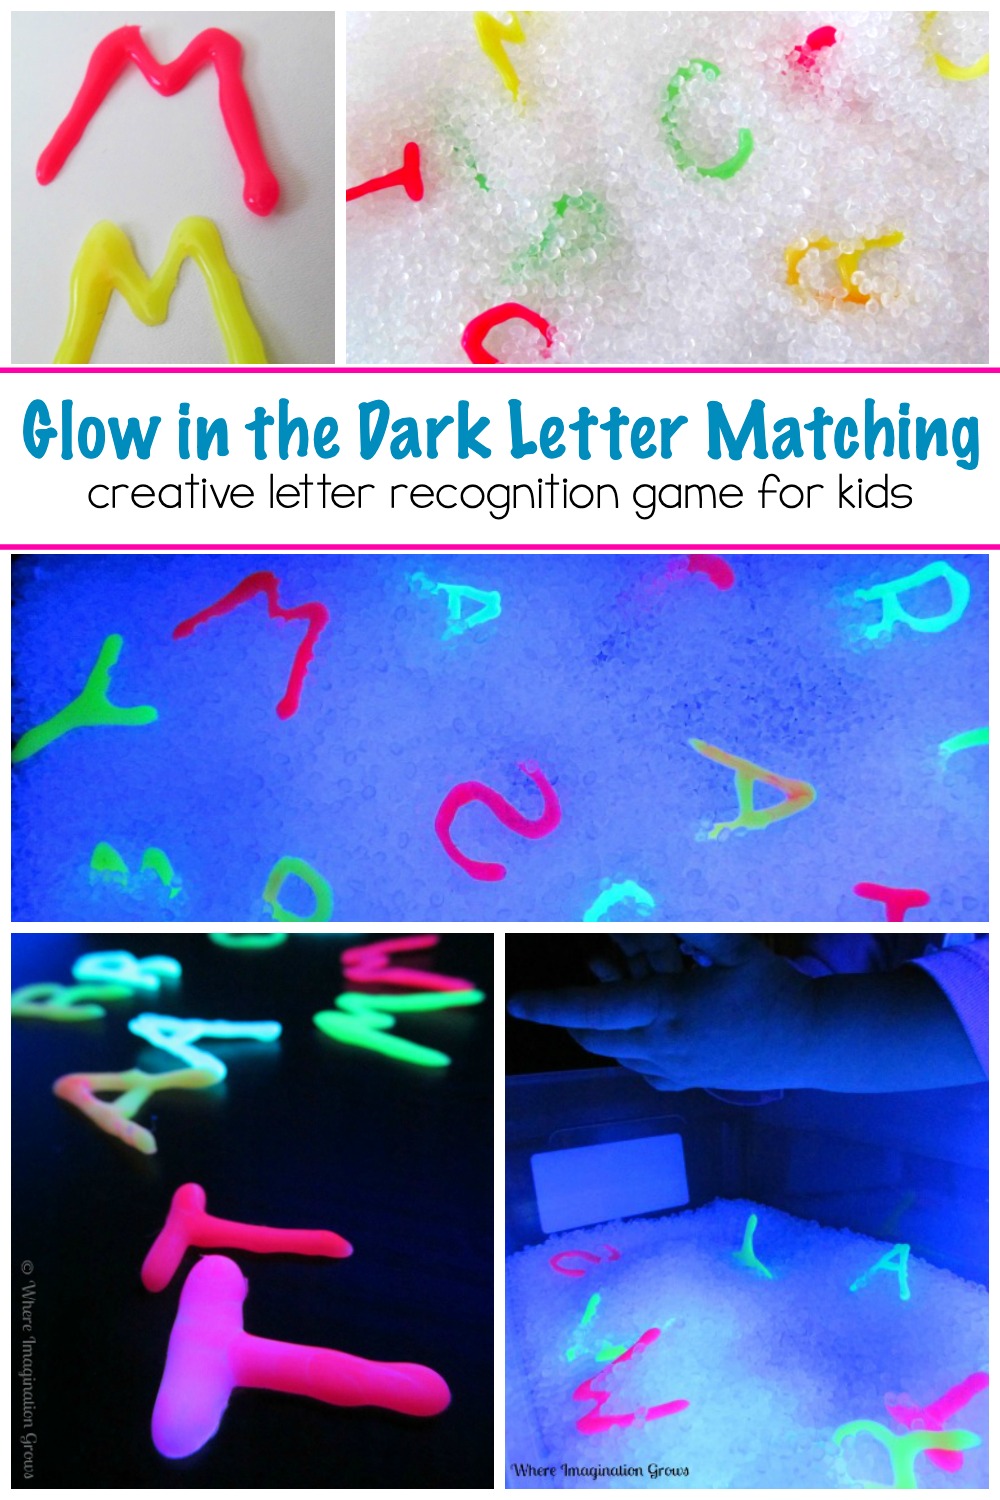 Glow in the Dark Letter Matching Sensory Bin Display Image